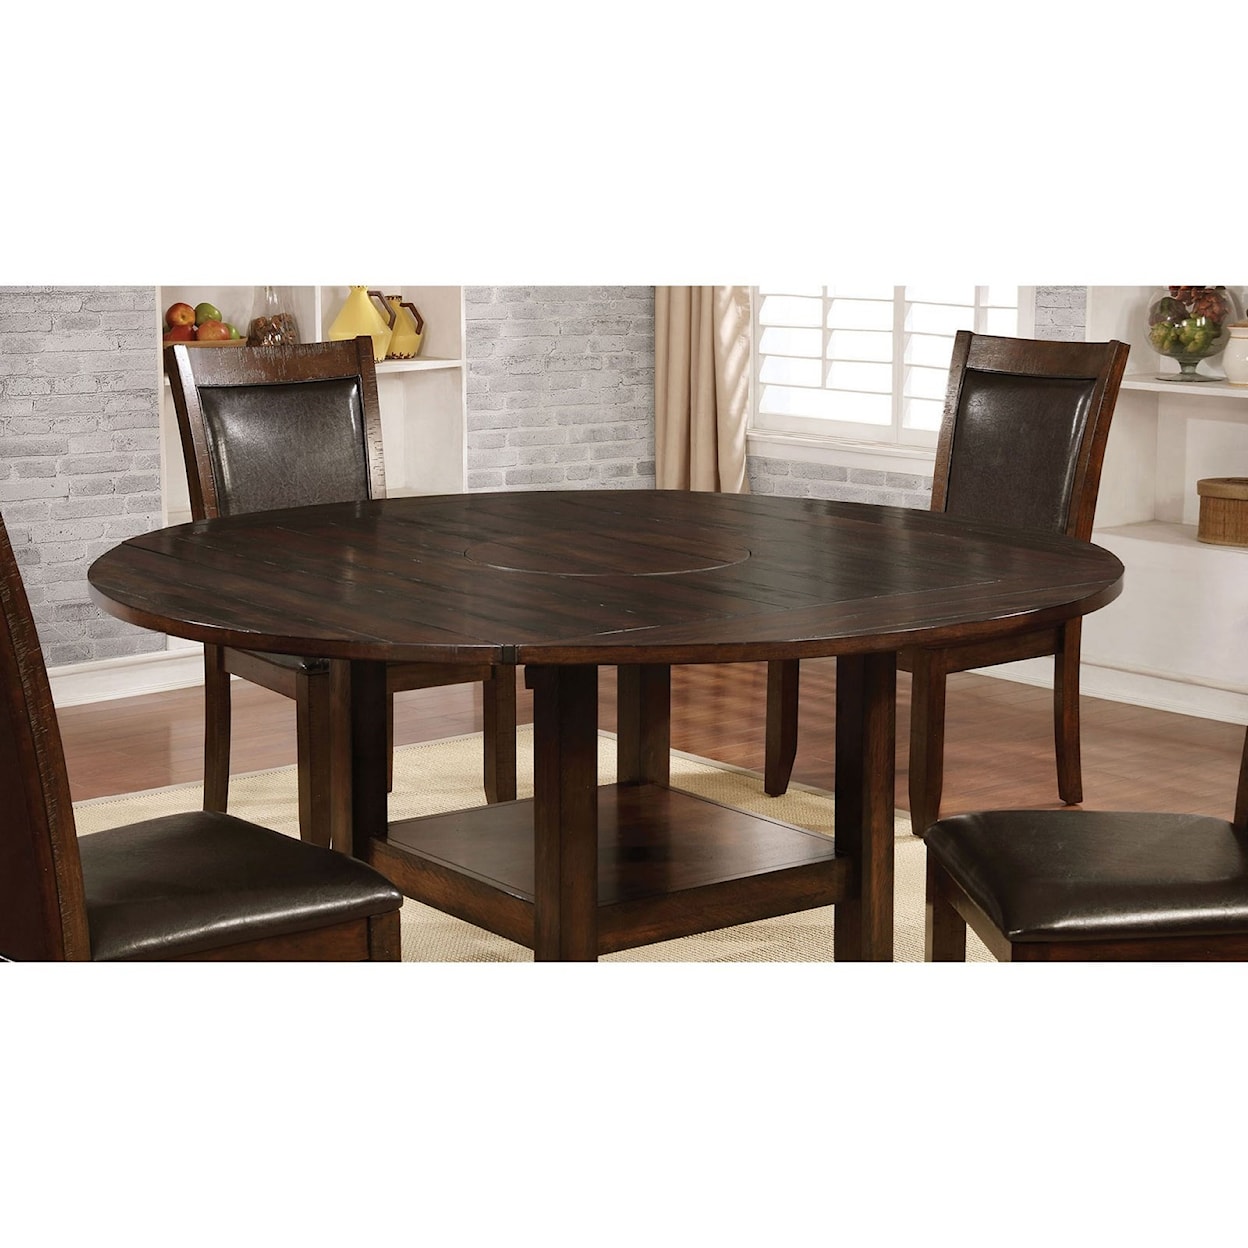 Furniture of America Meagan II Round Table